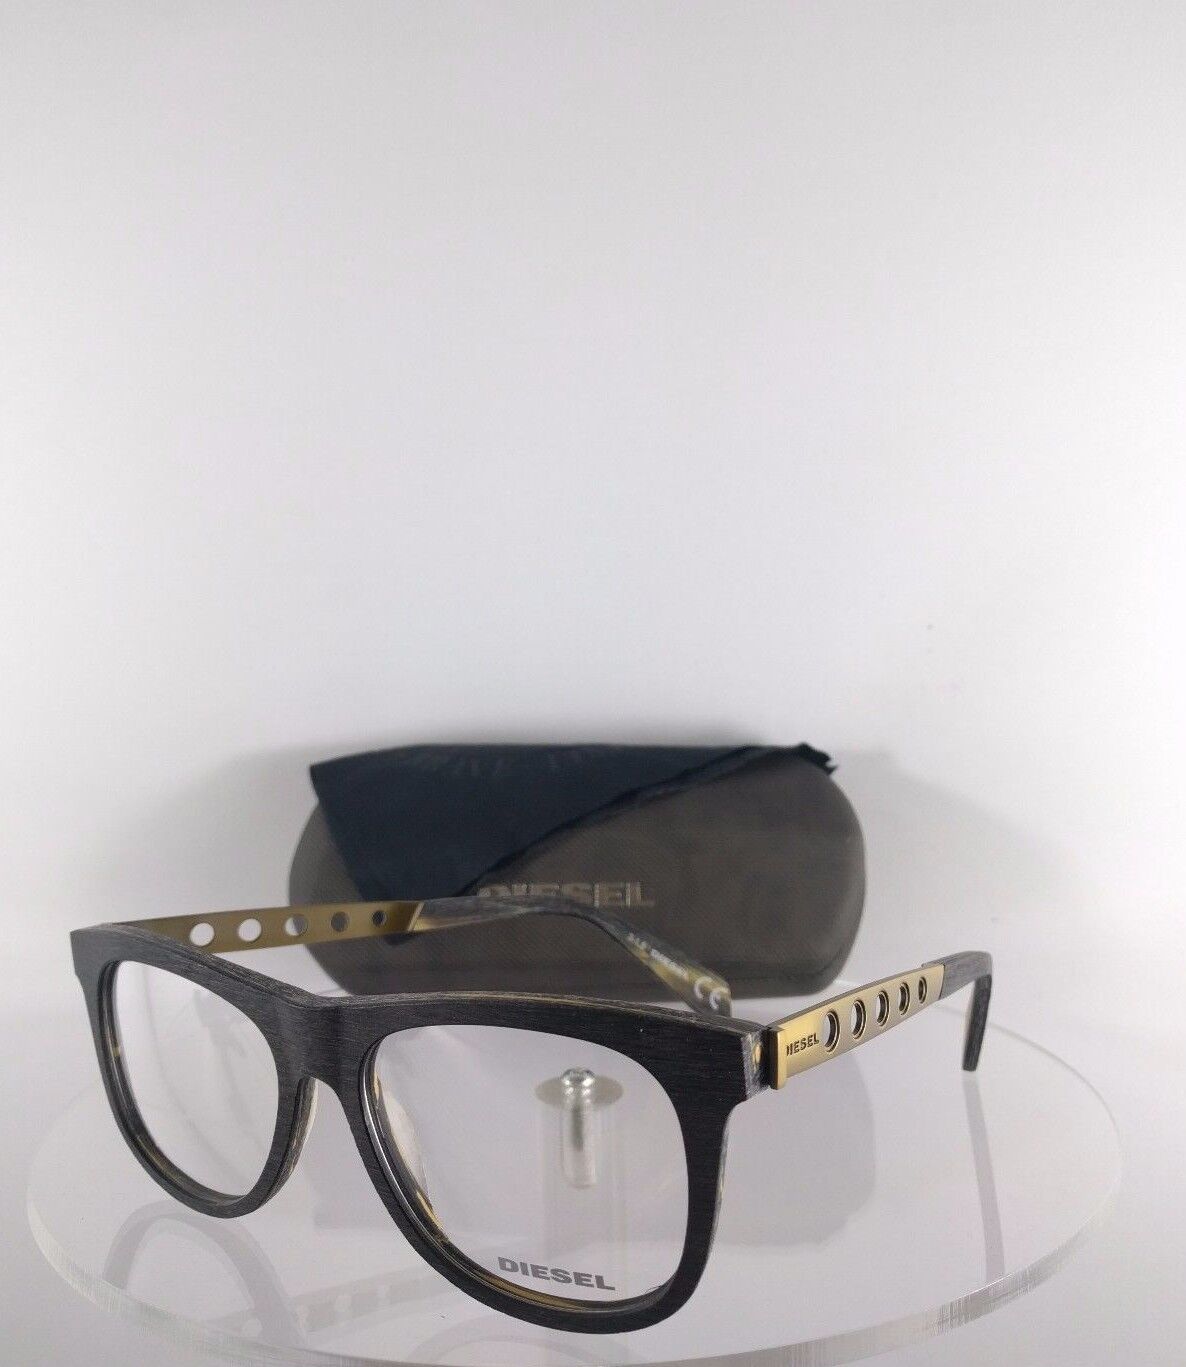 Brand New Authentic Diesel Eyeglasses DL. 5115 Col. 005 54mm